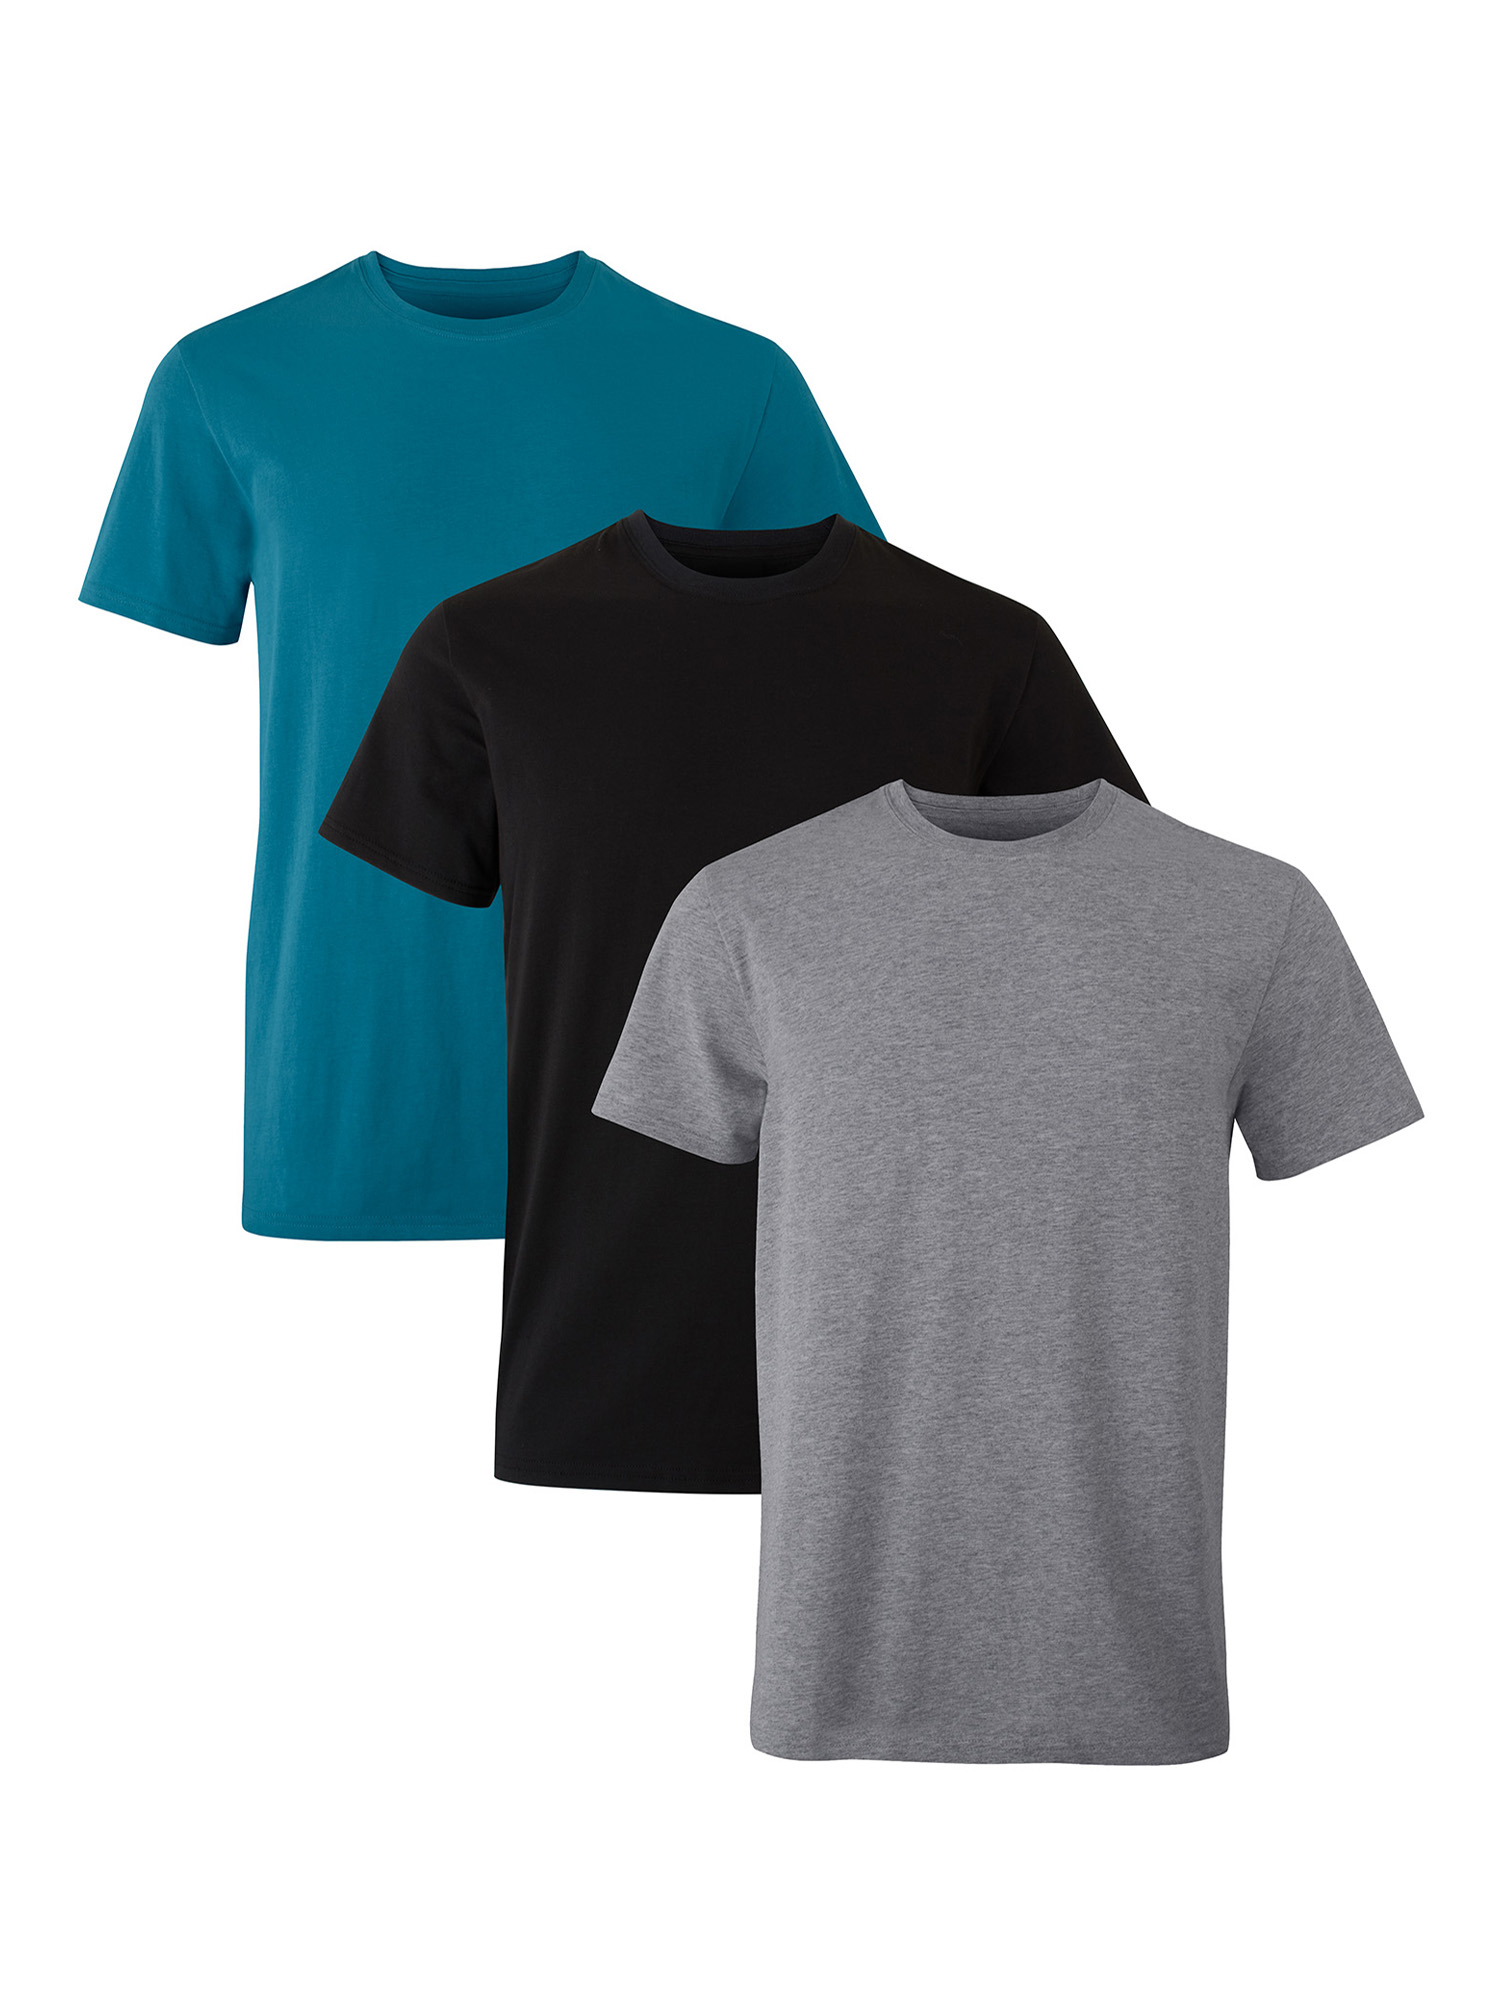 Hanes Originals Men’s T-Shirts Pack, Moisture-Wicking Stretch Cotton, 3-Pack